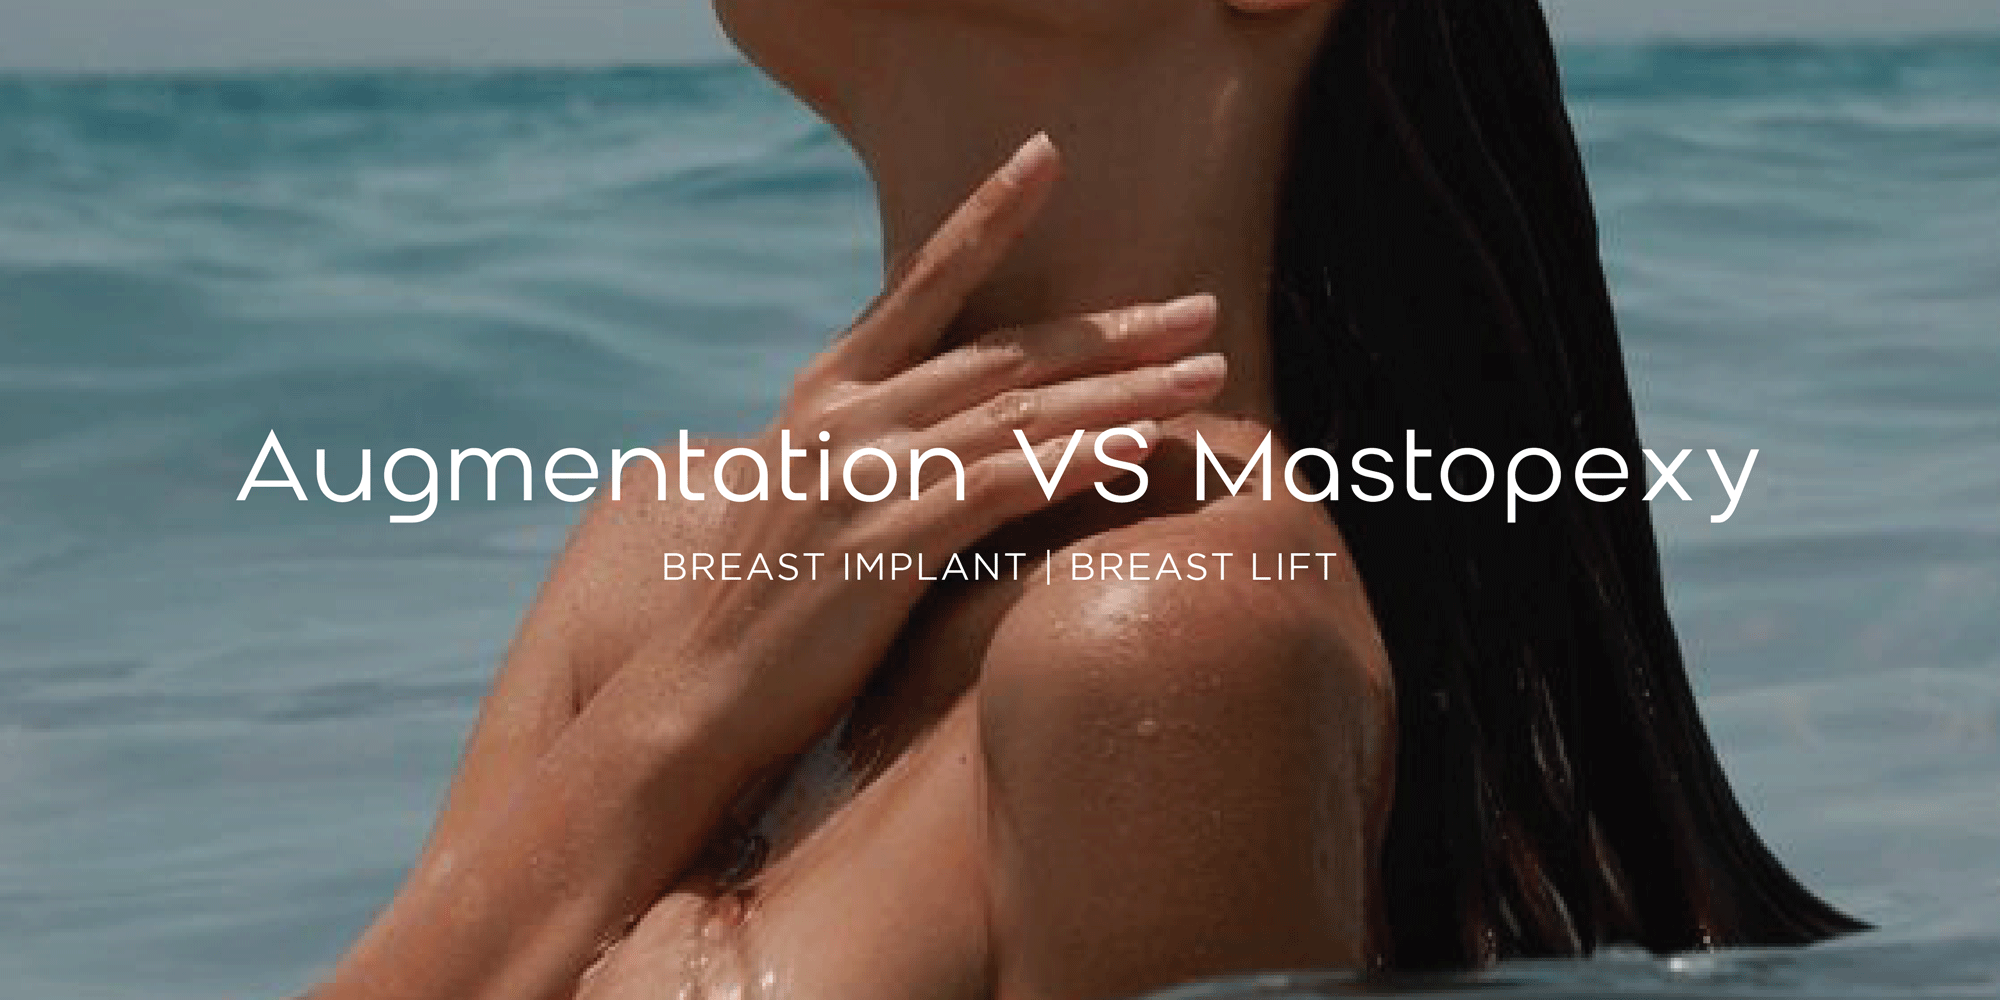 Augmentation VS Mastopexy